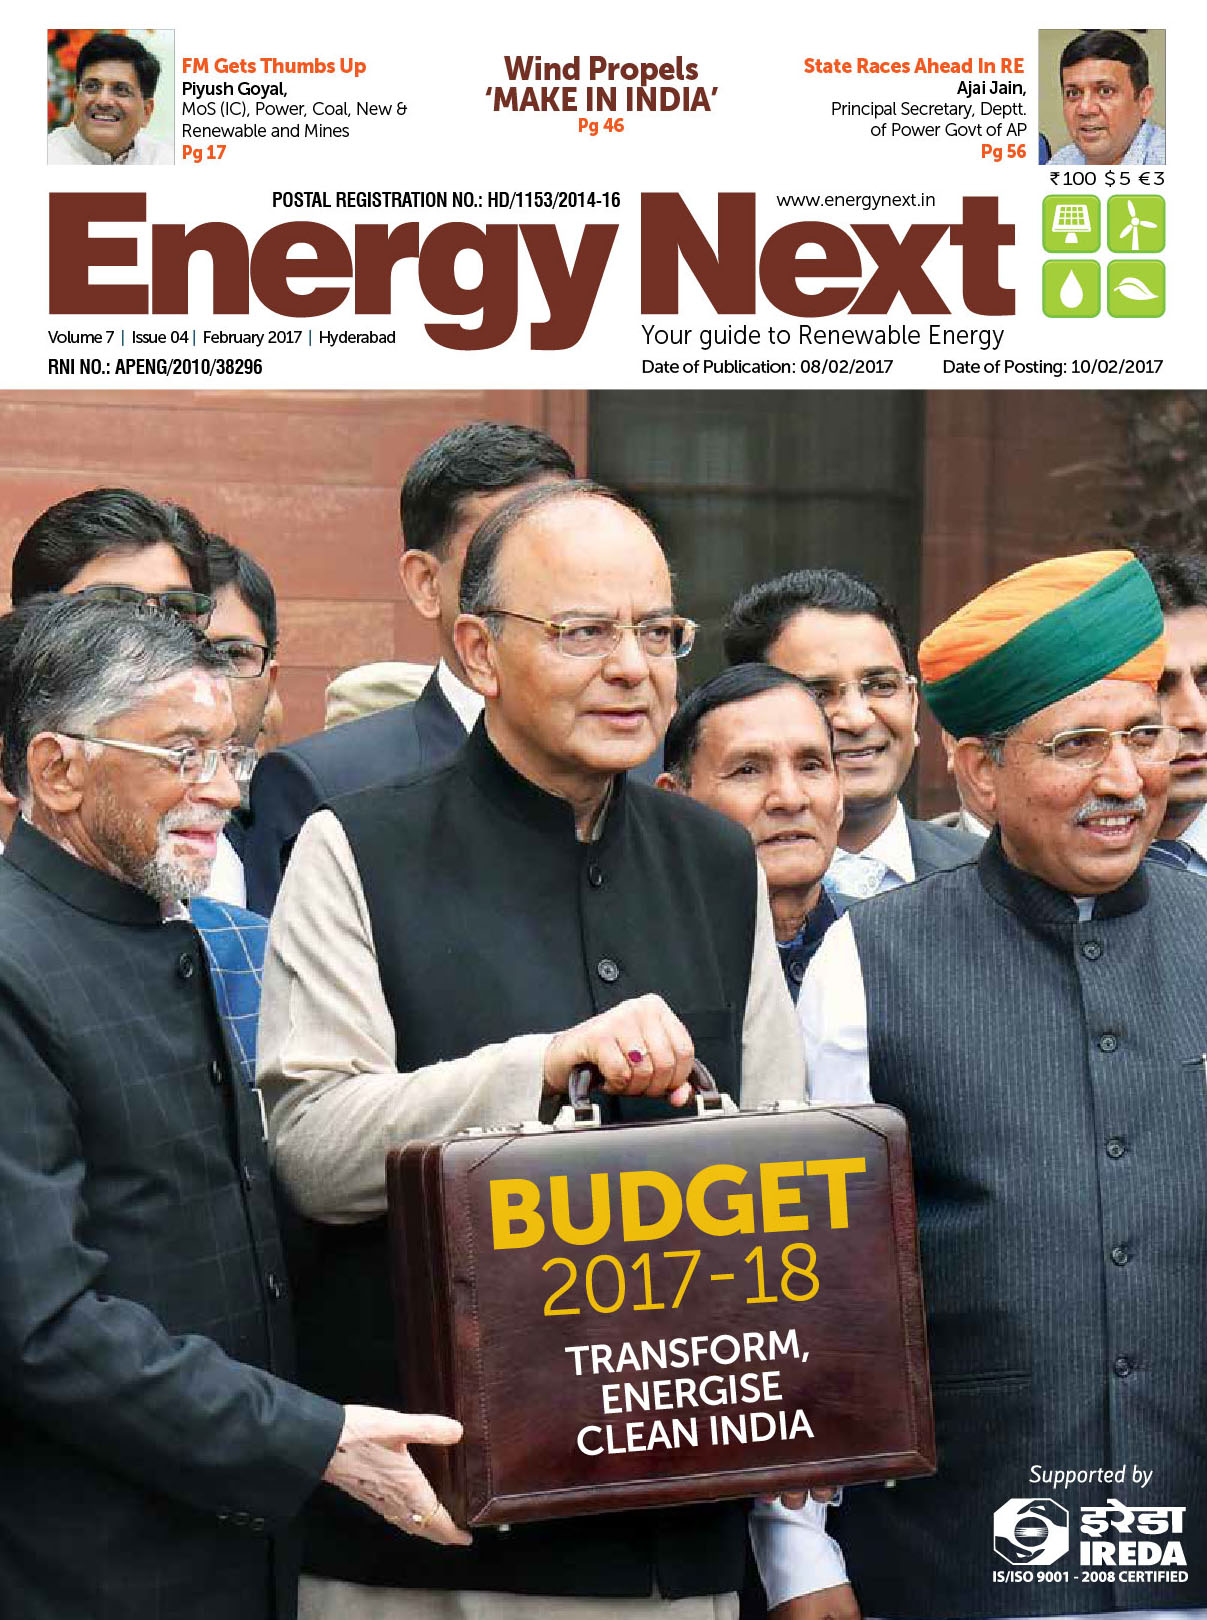 EnergyNext volume 7 issue 4 Feb 2017